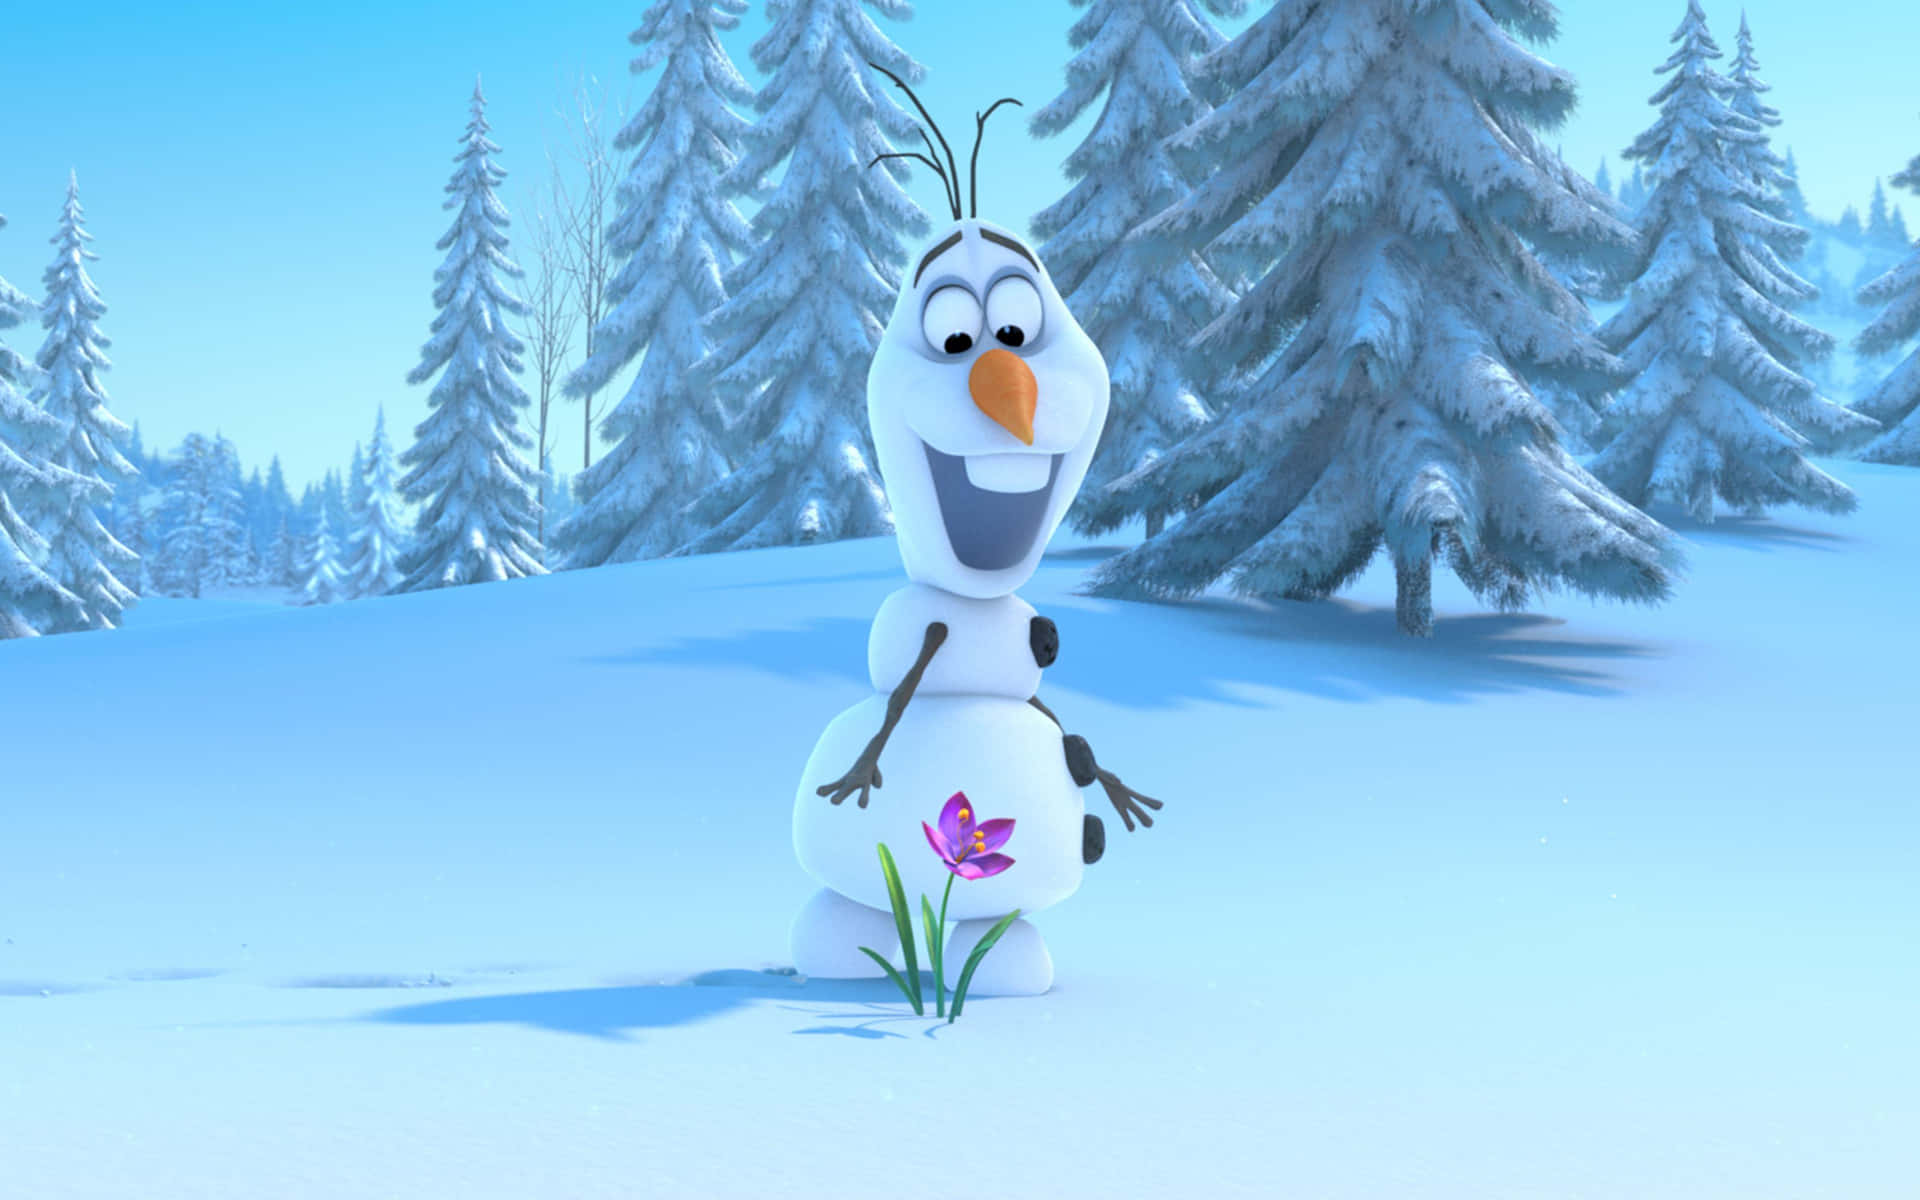 A friendly snowman enjoying the winter